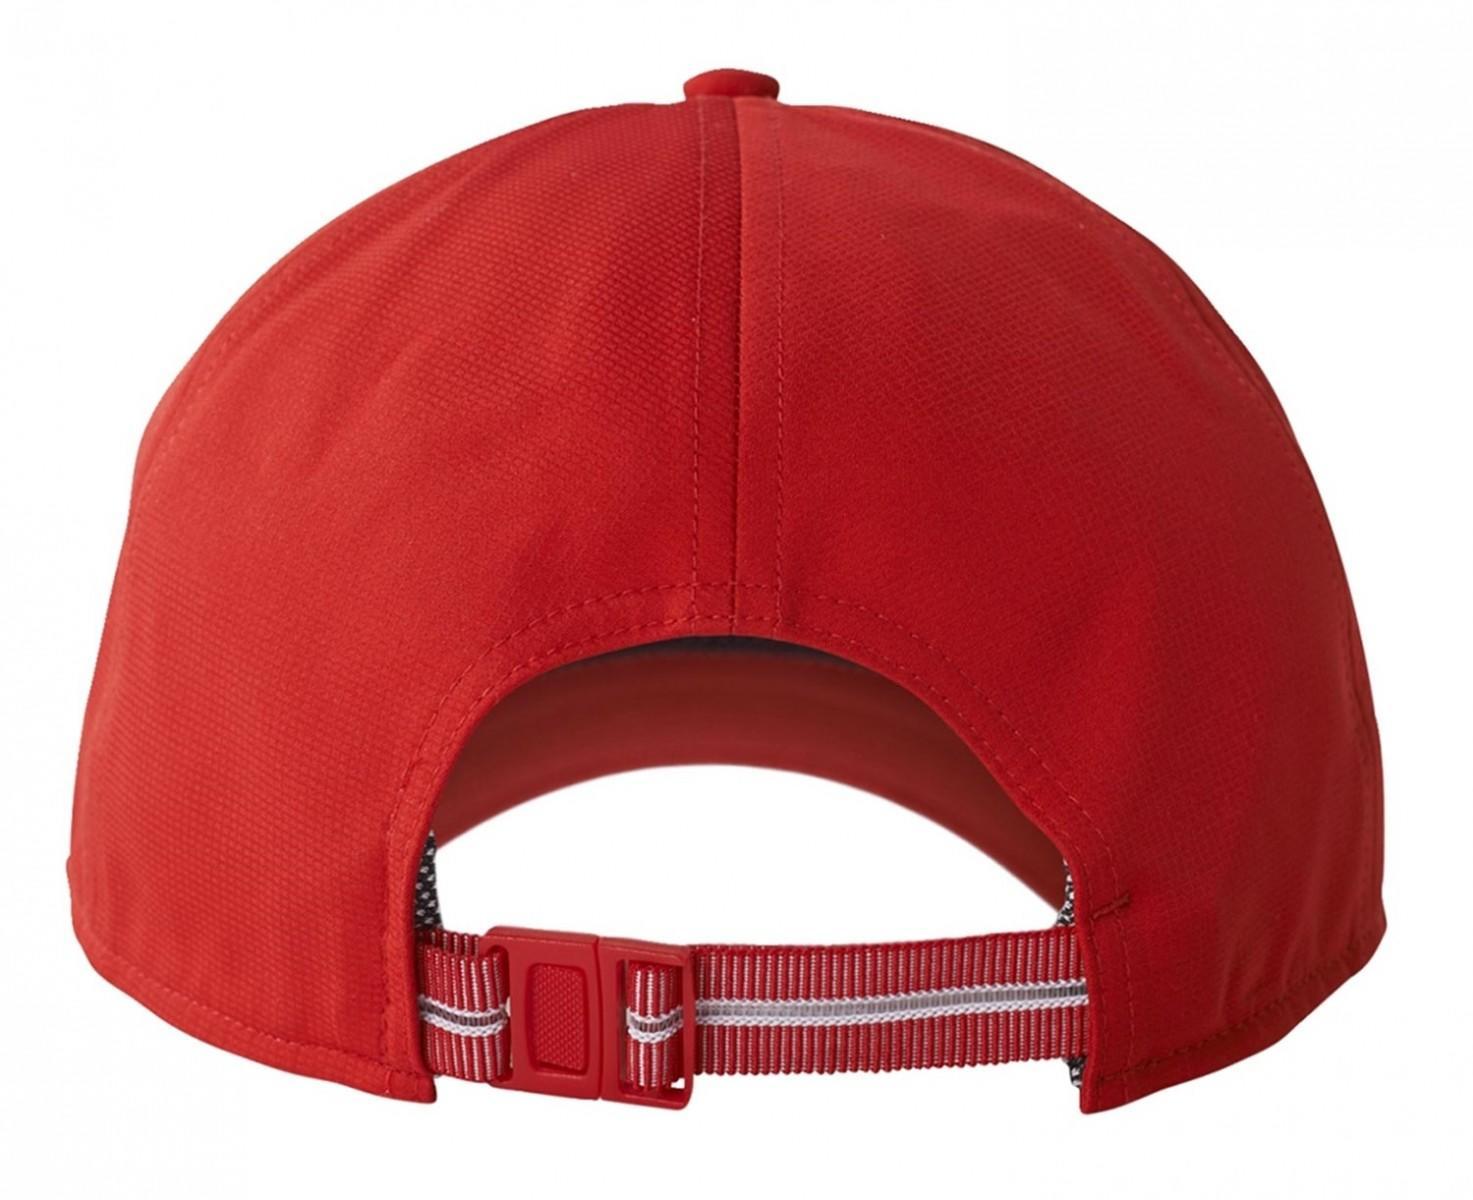 Теннисная кепка Adidas 5 Panel Classic Climalite cap red